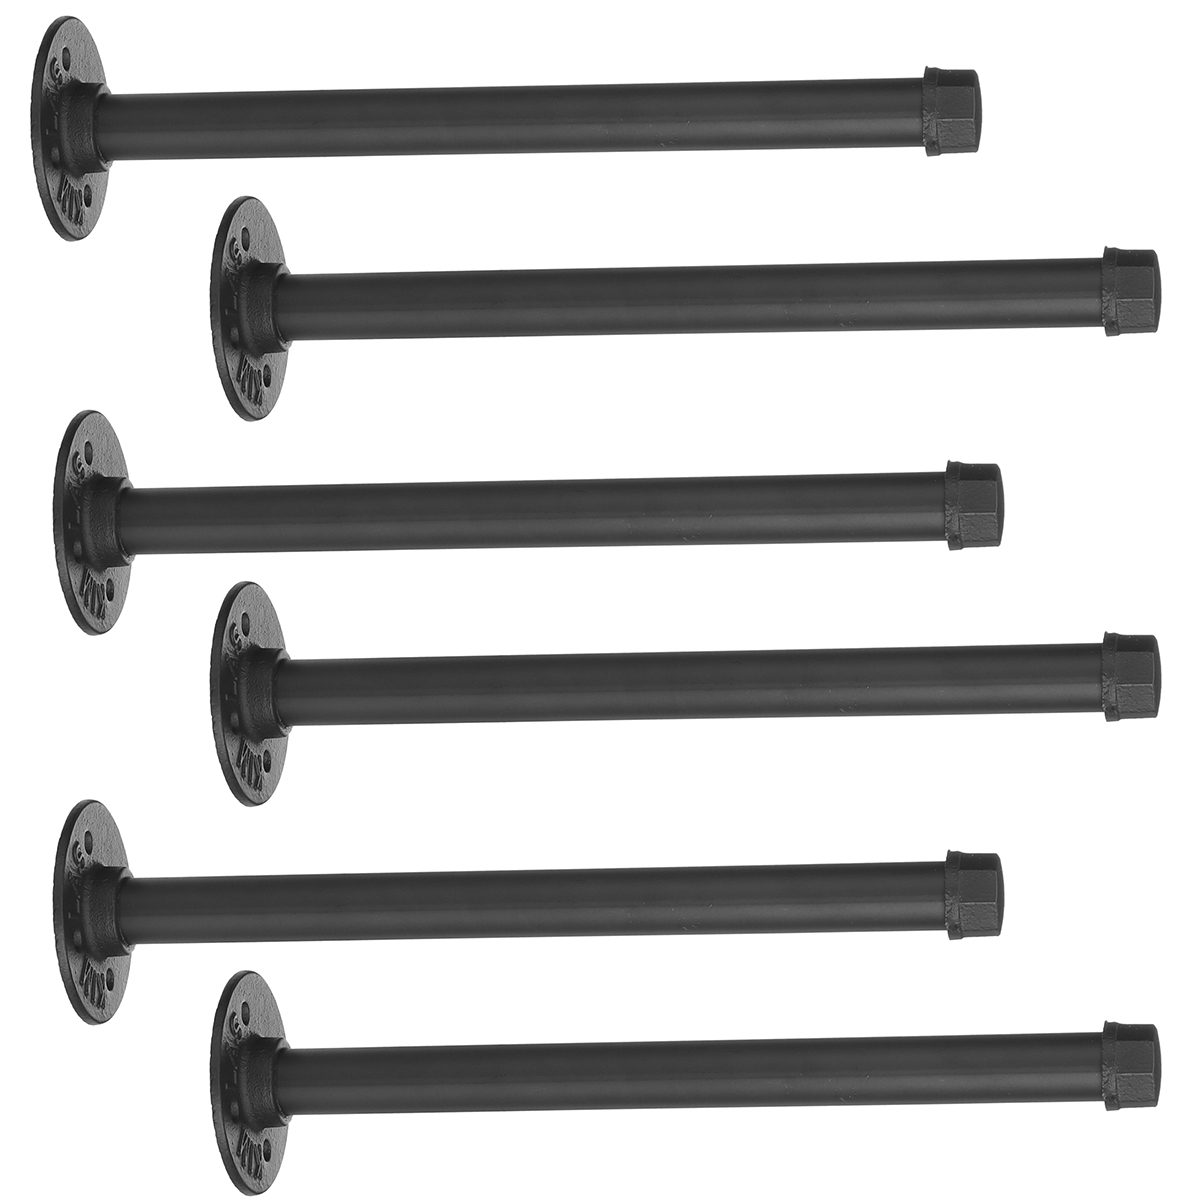 Iron-Pipe-Shelf-Retro-Design-Black-Iron-Pipe-Wall-Mount-Shelf-Shelving-Tool-1723779-7